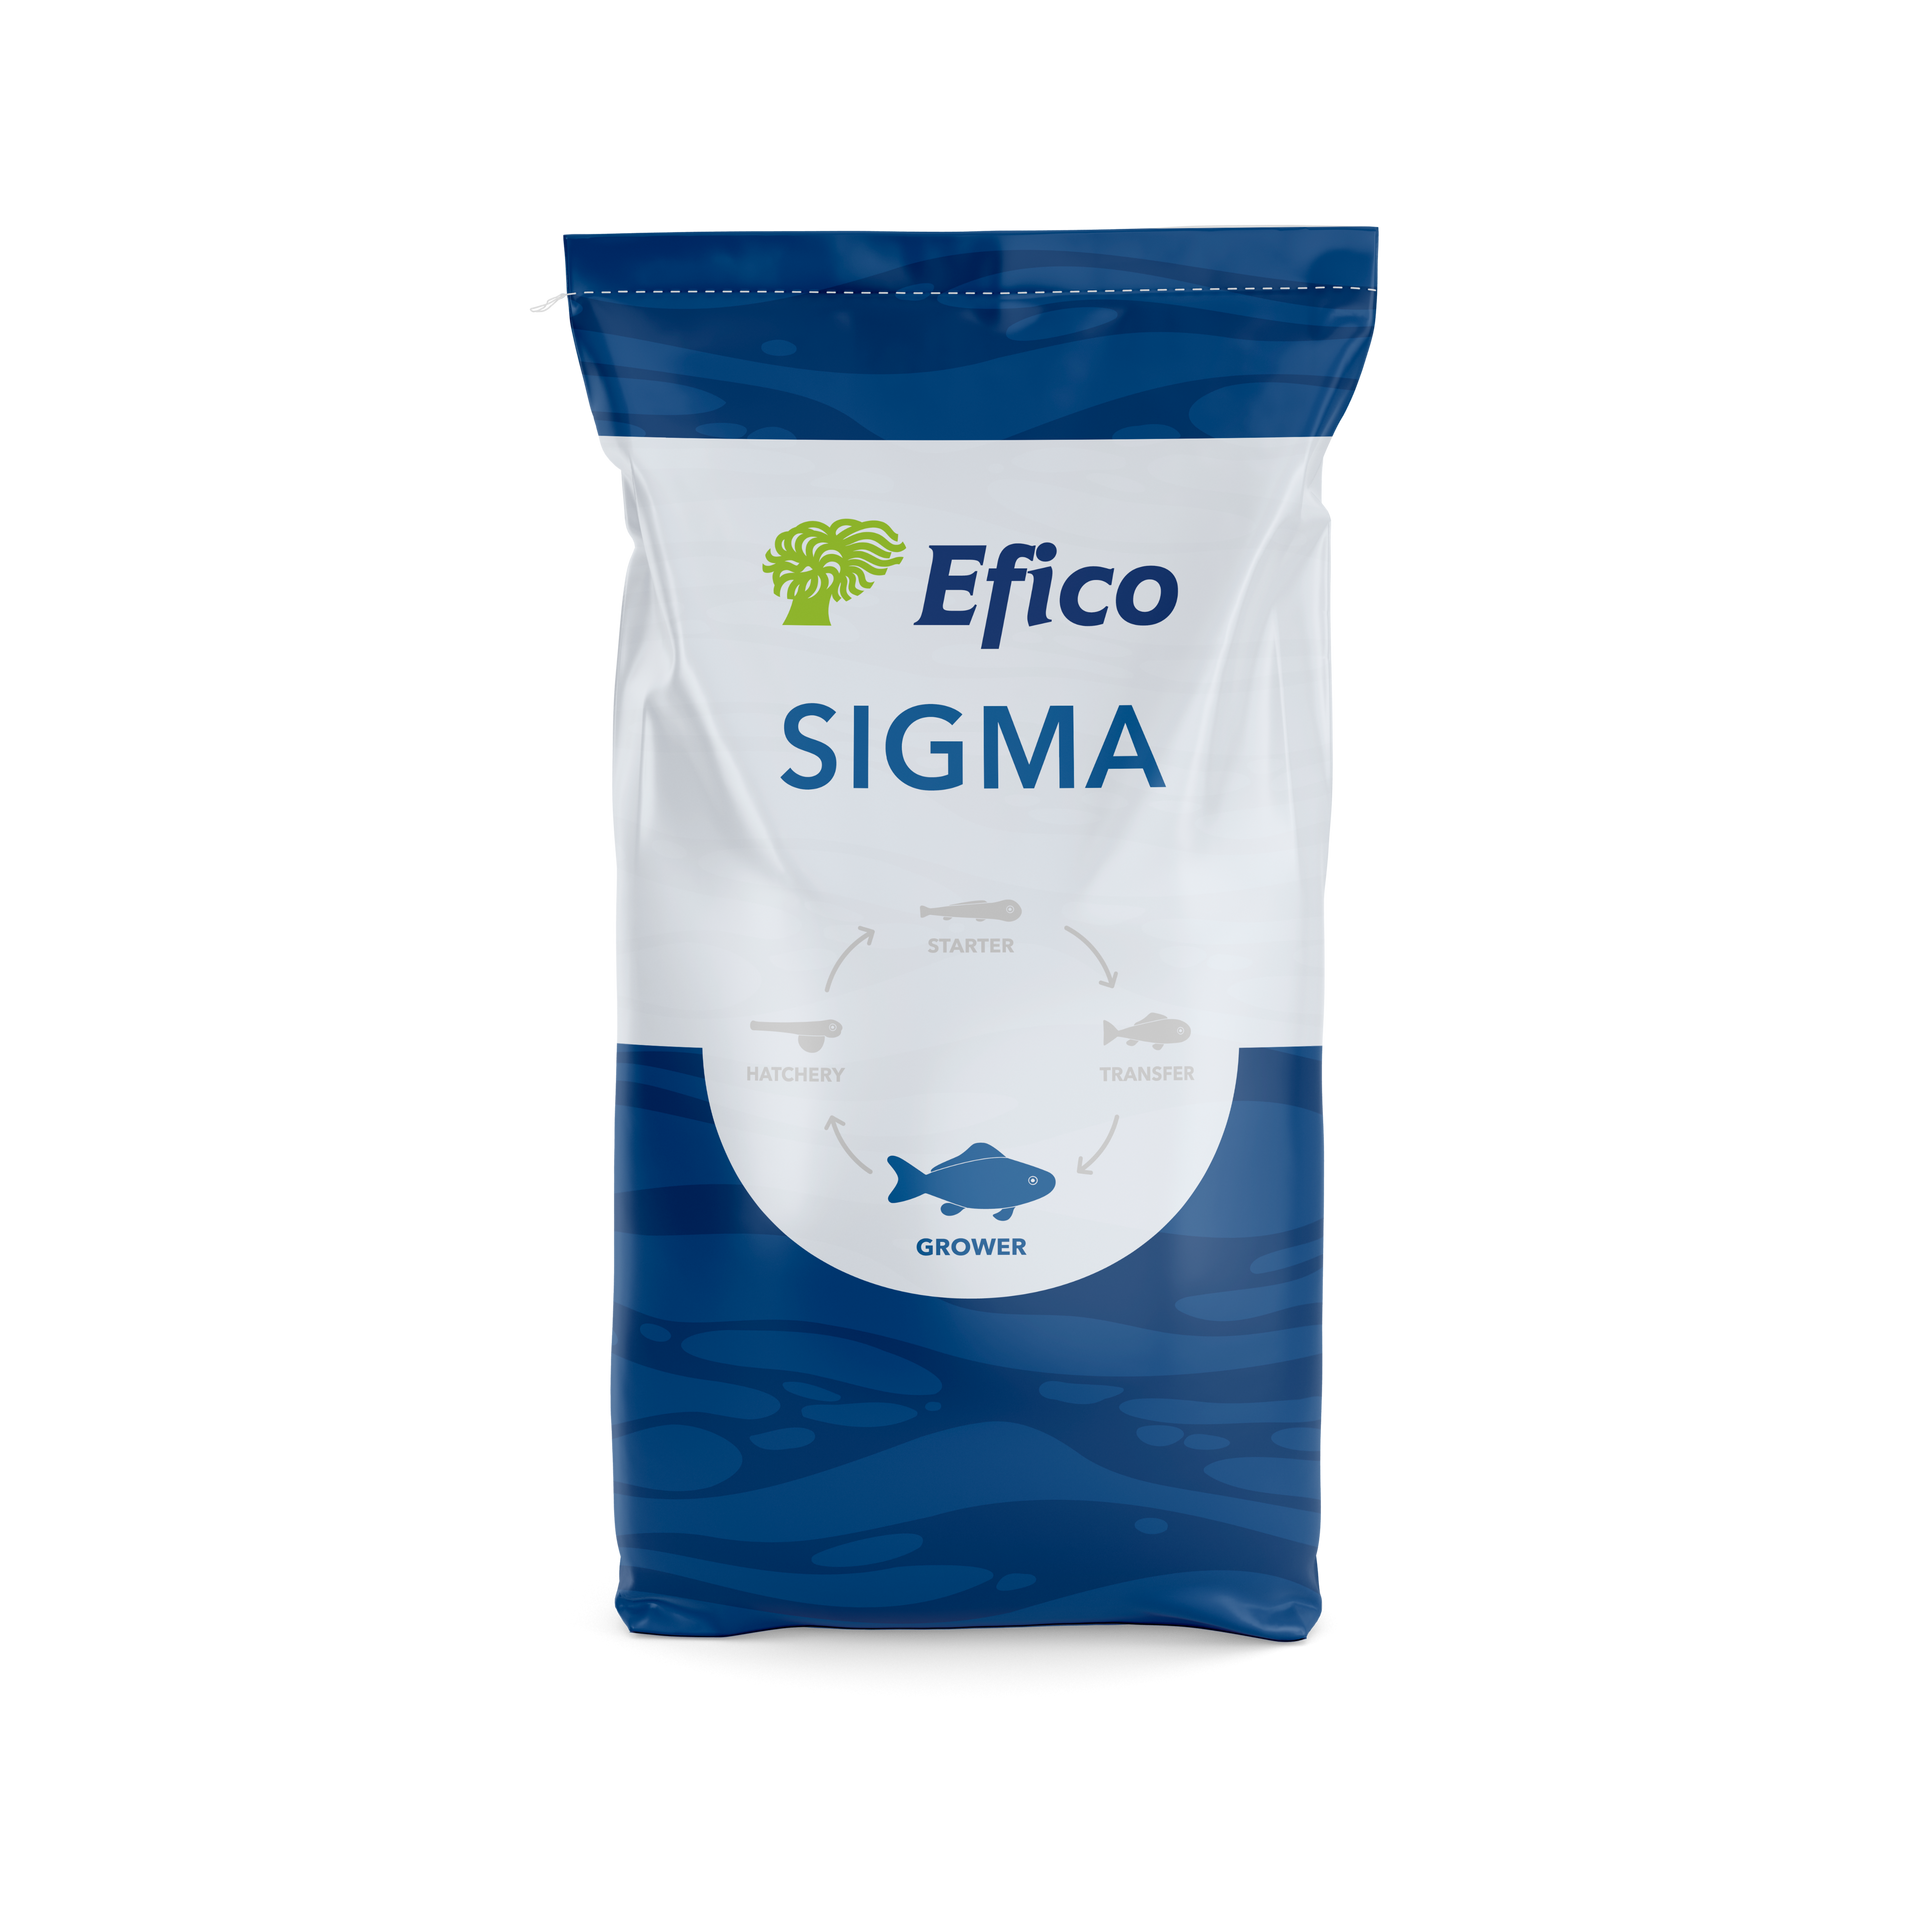 BioMar's Efico Sigma top performance feed